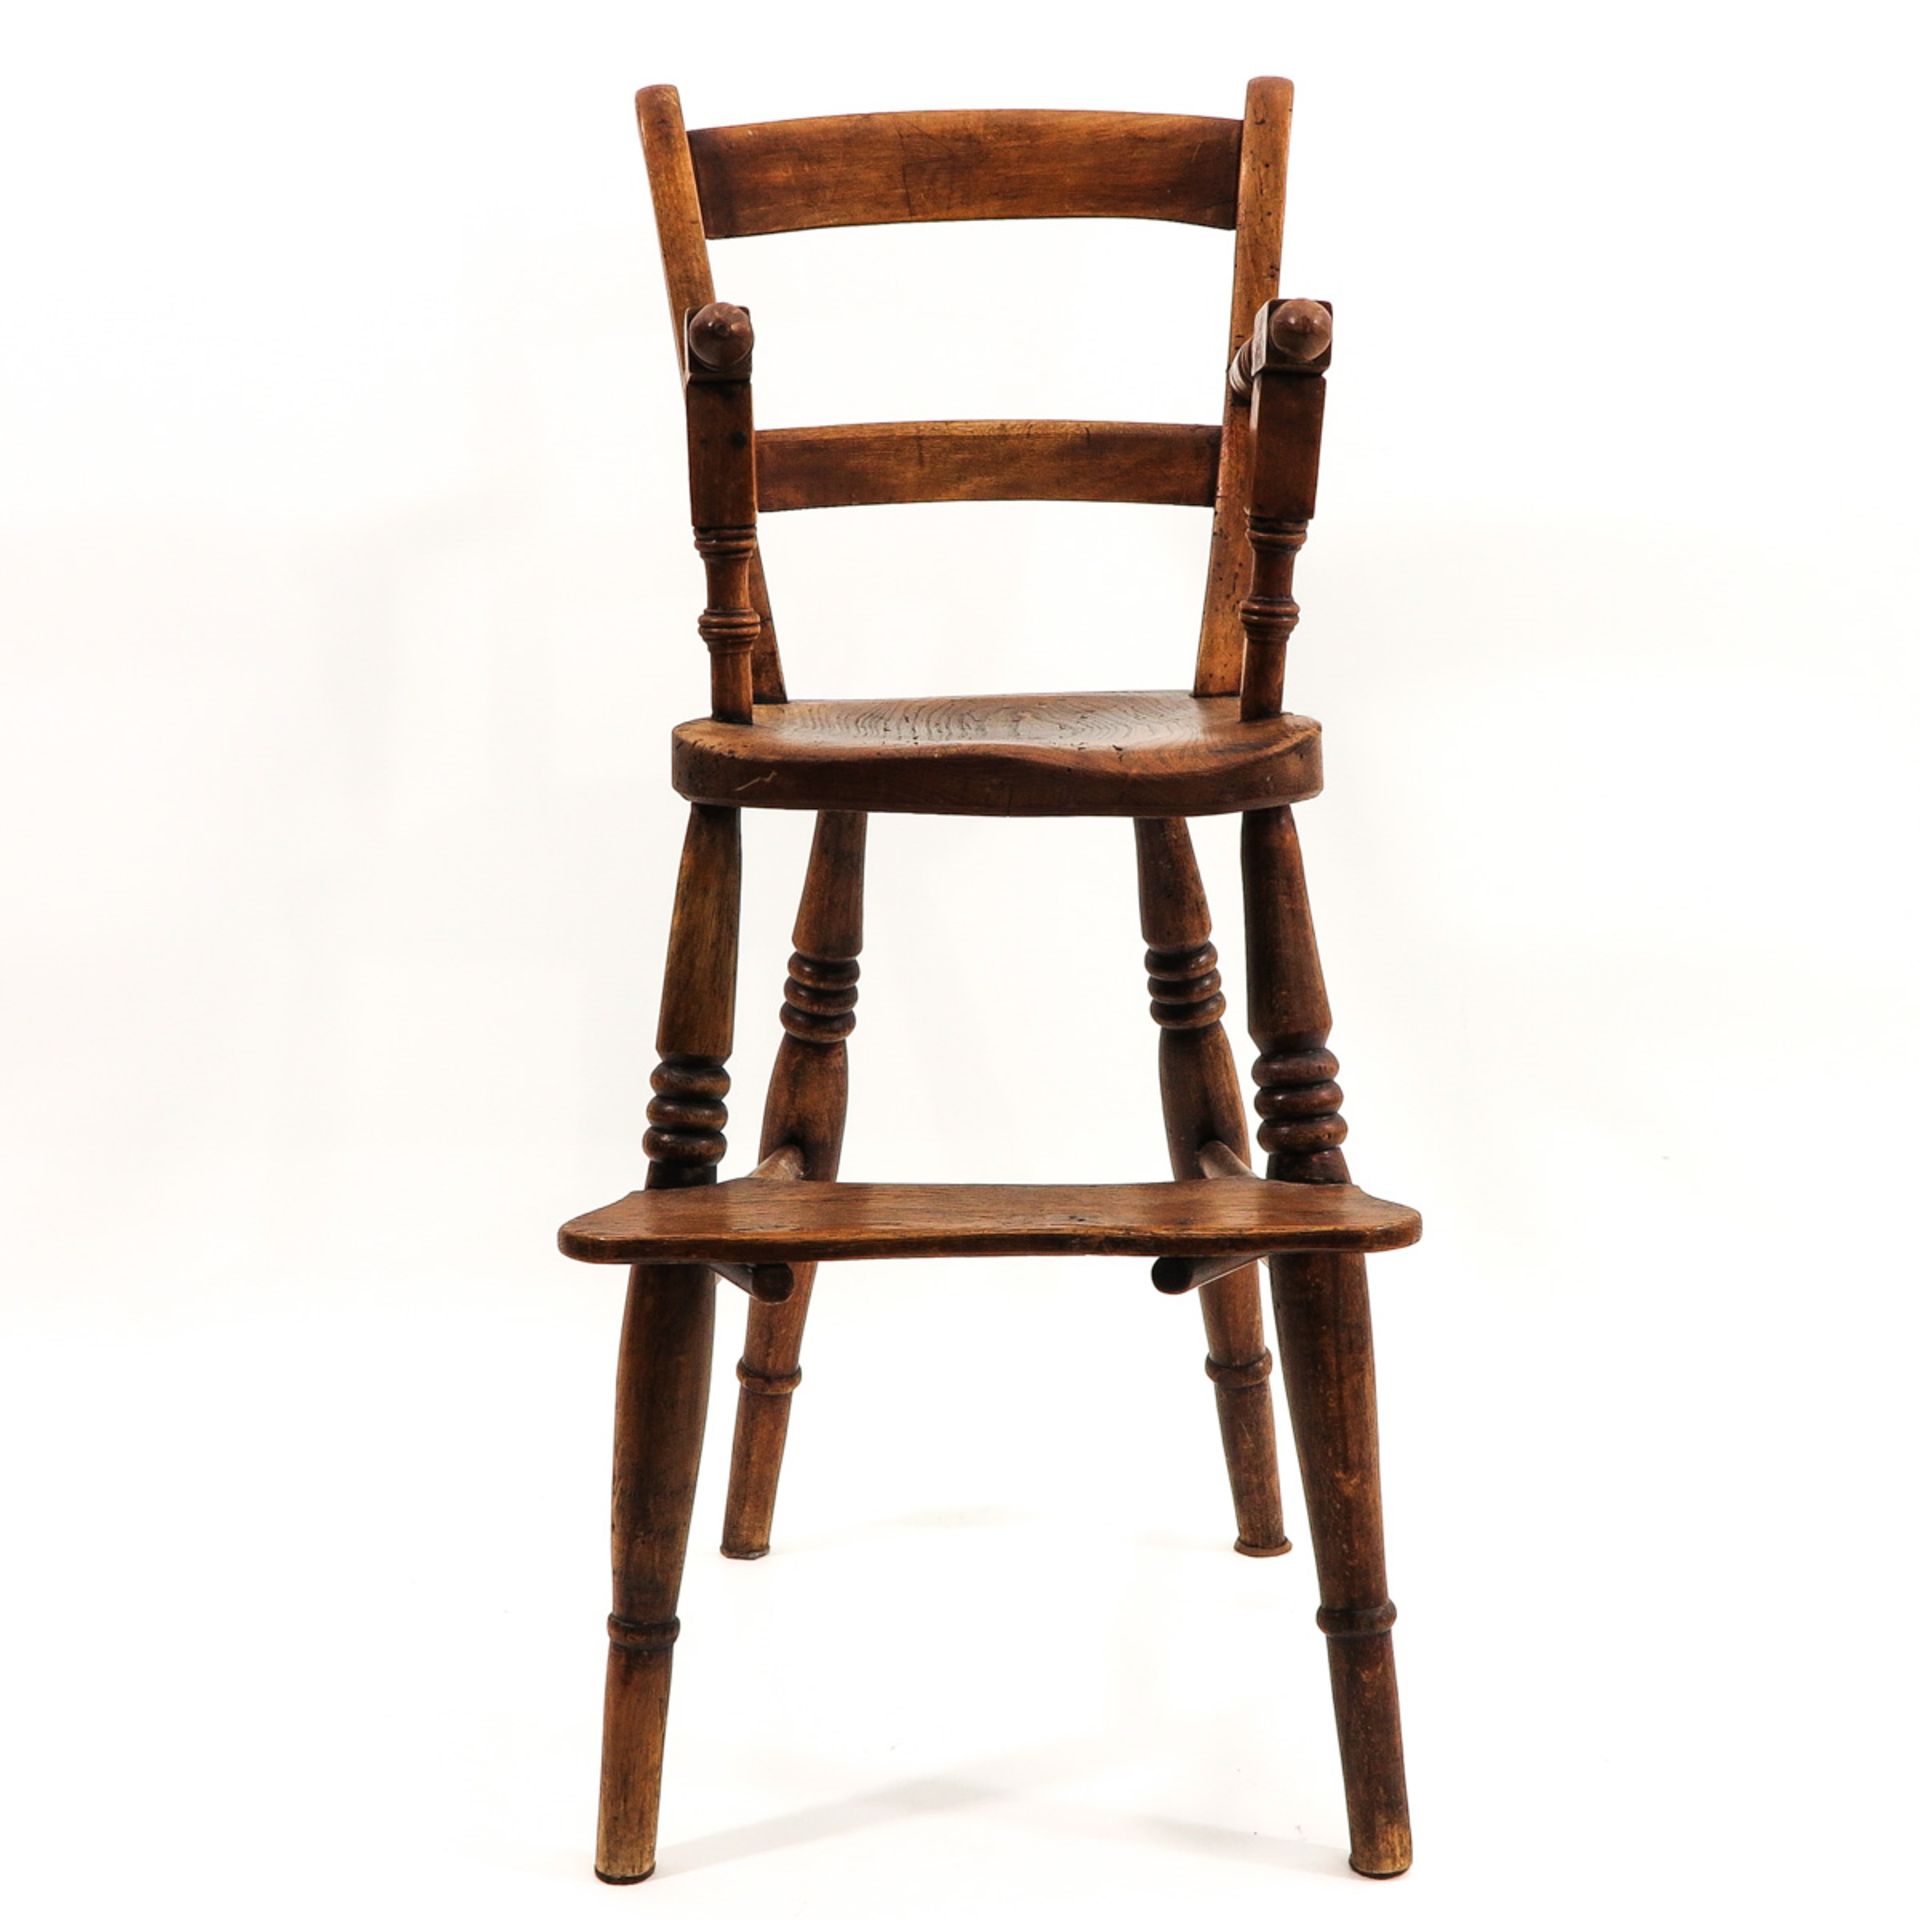 An Antique High Chair and Potty Chair - Bild 3 aus 8